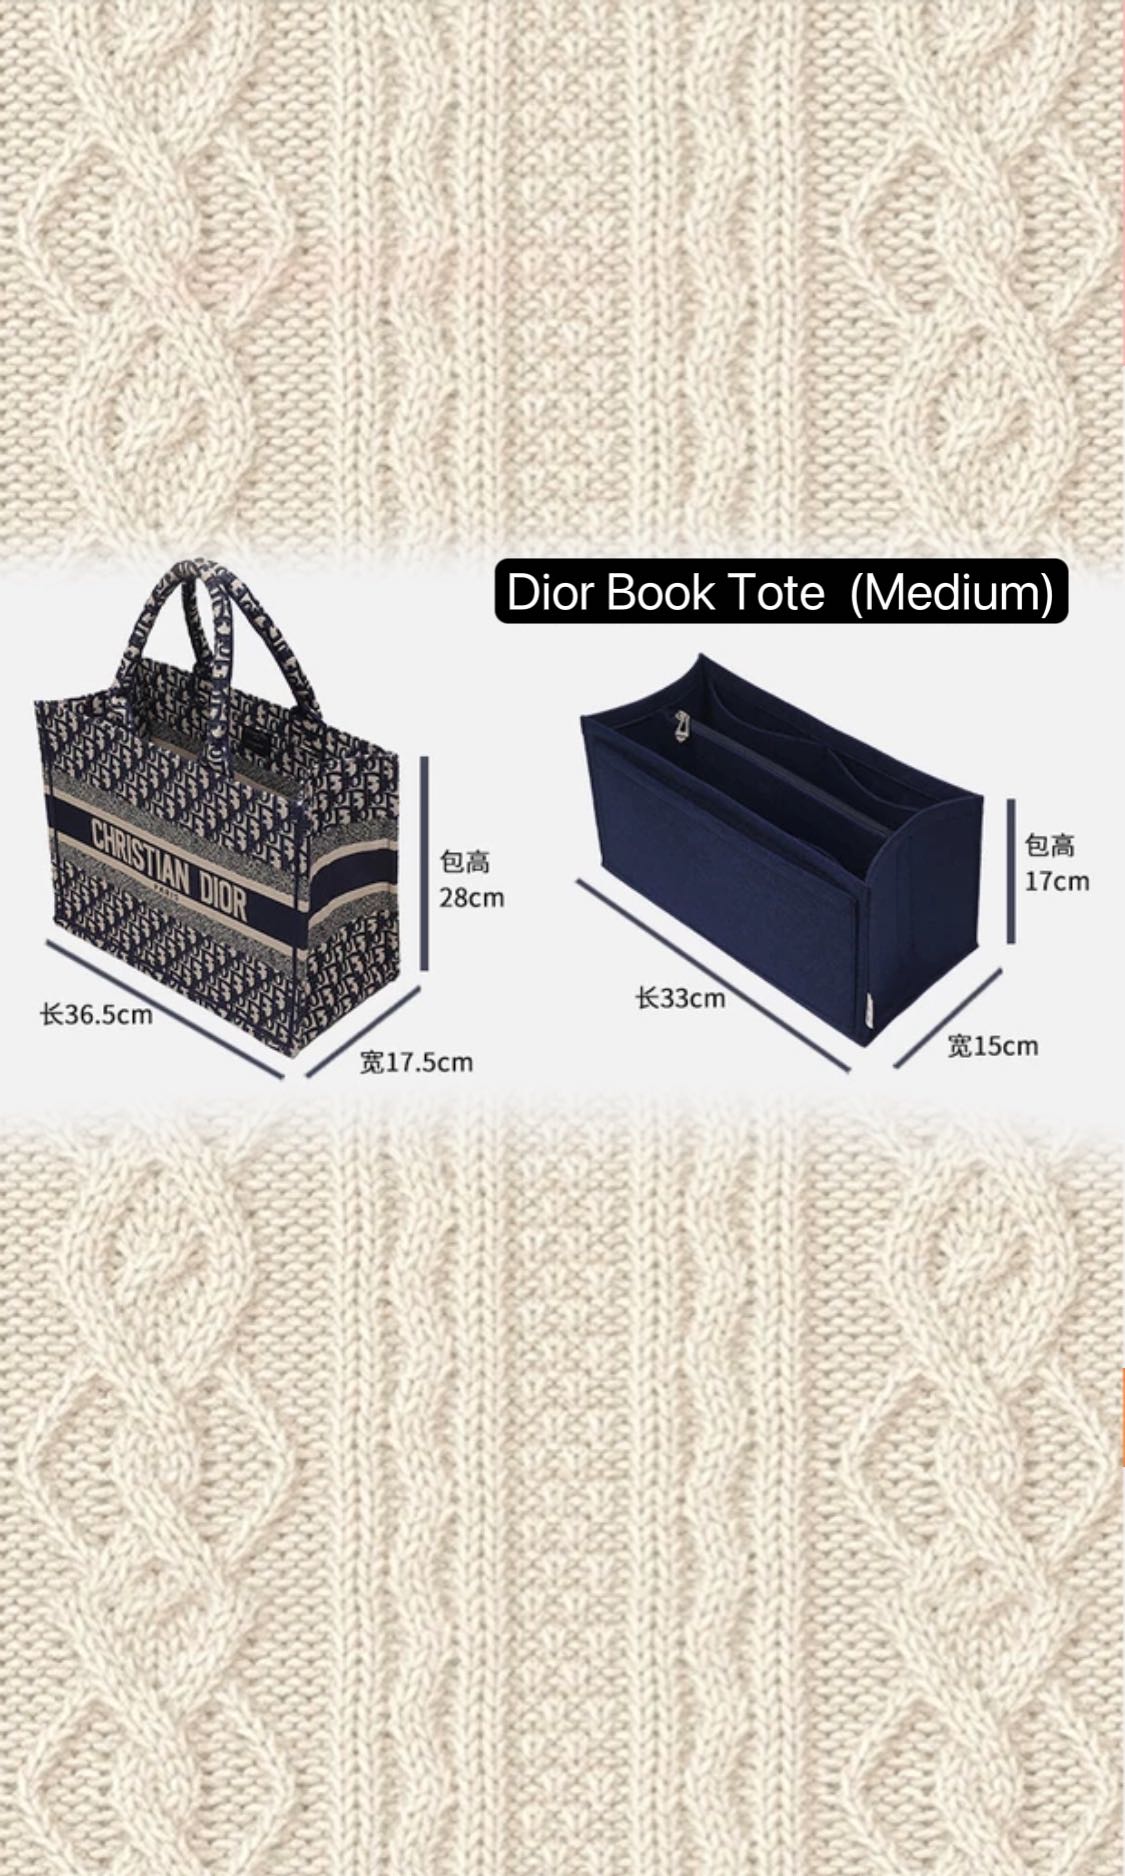 Dior Book Tote Organizer, Dior Book Tote